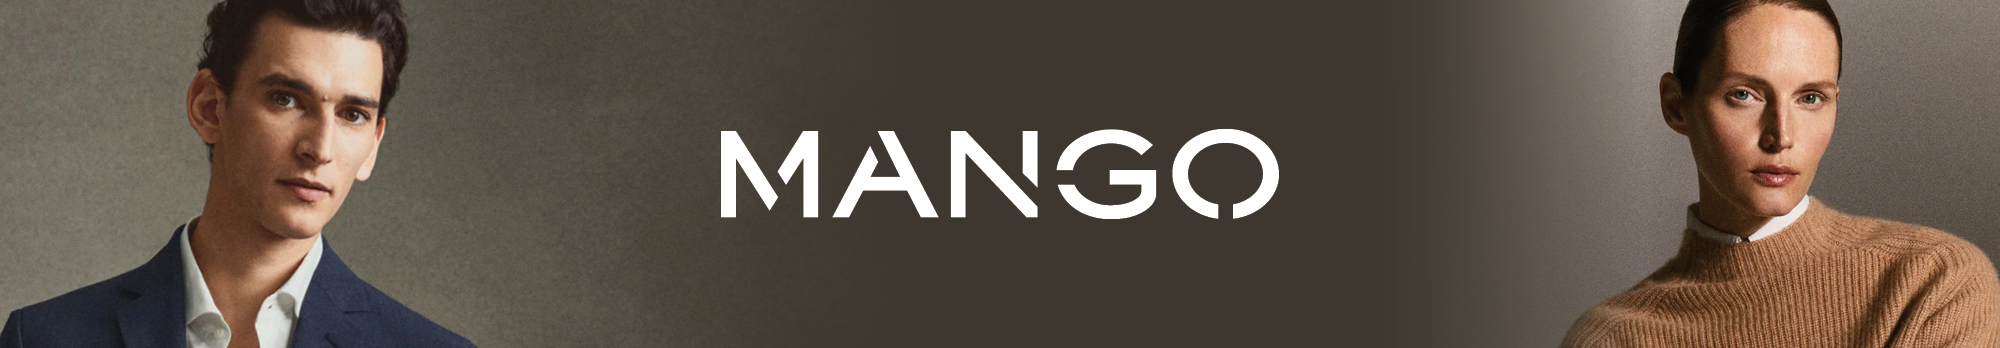 Mango Brands Page